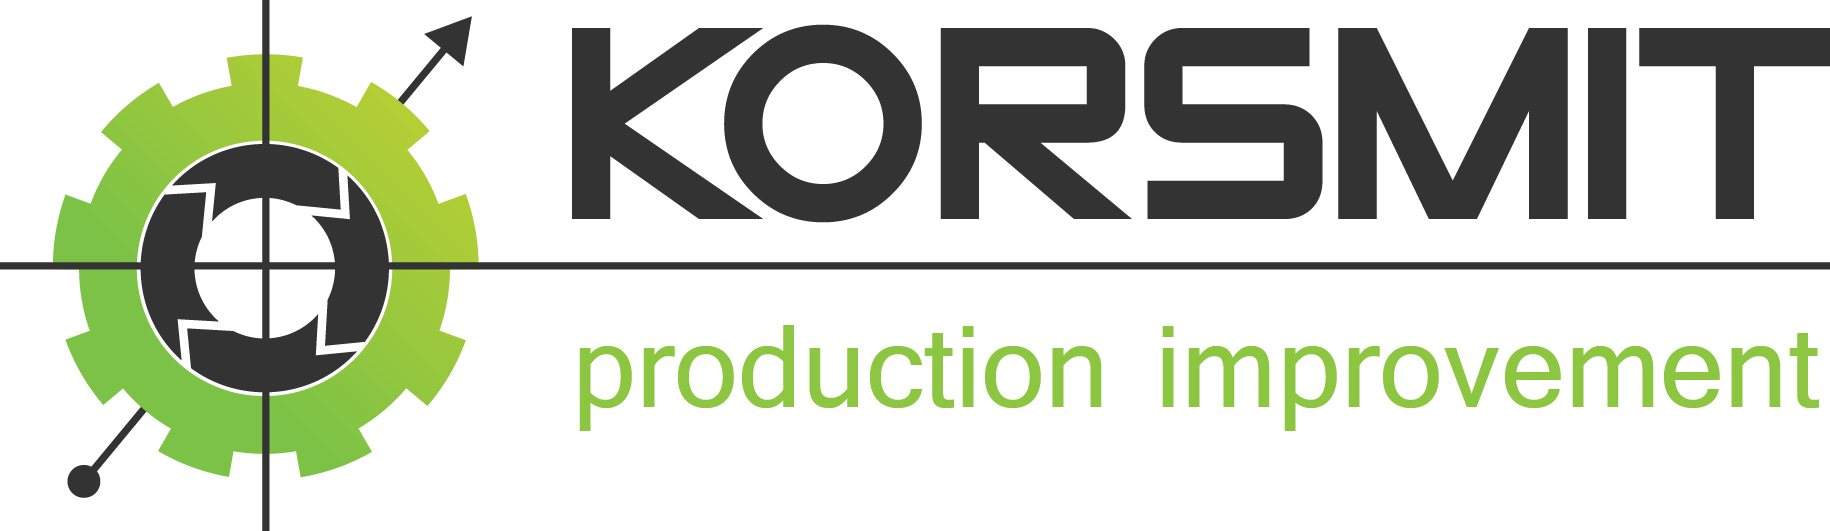 Korsmit Production Improvement